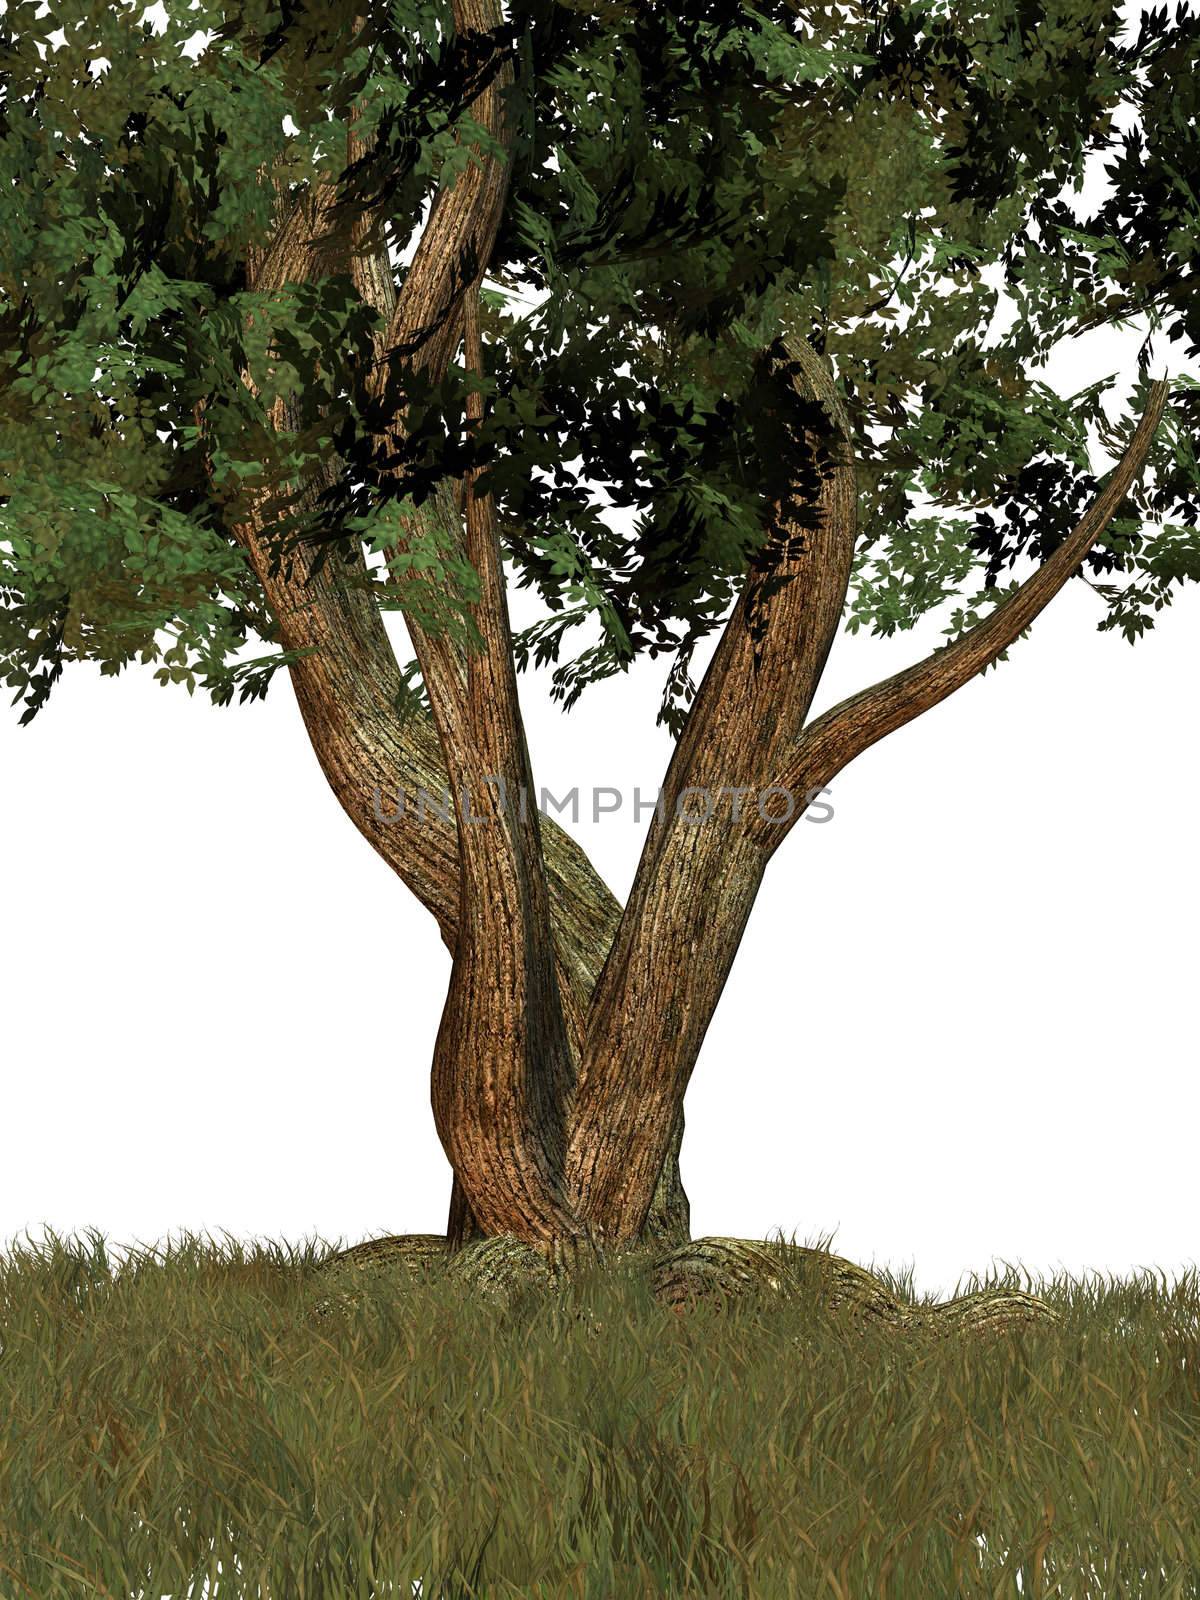 One Big Tree by kathygold